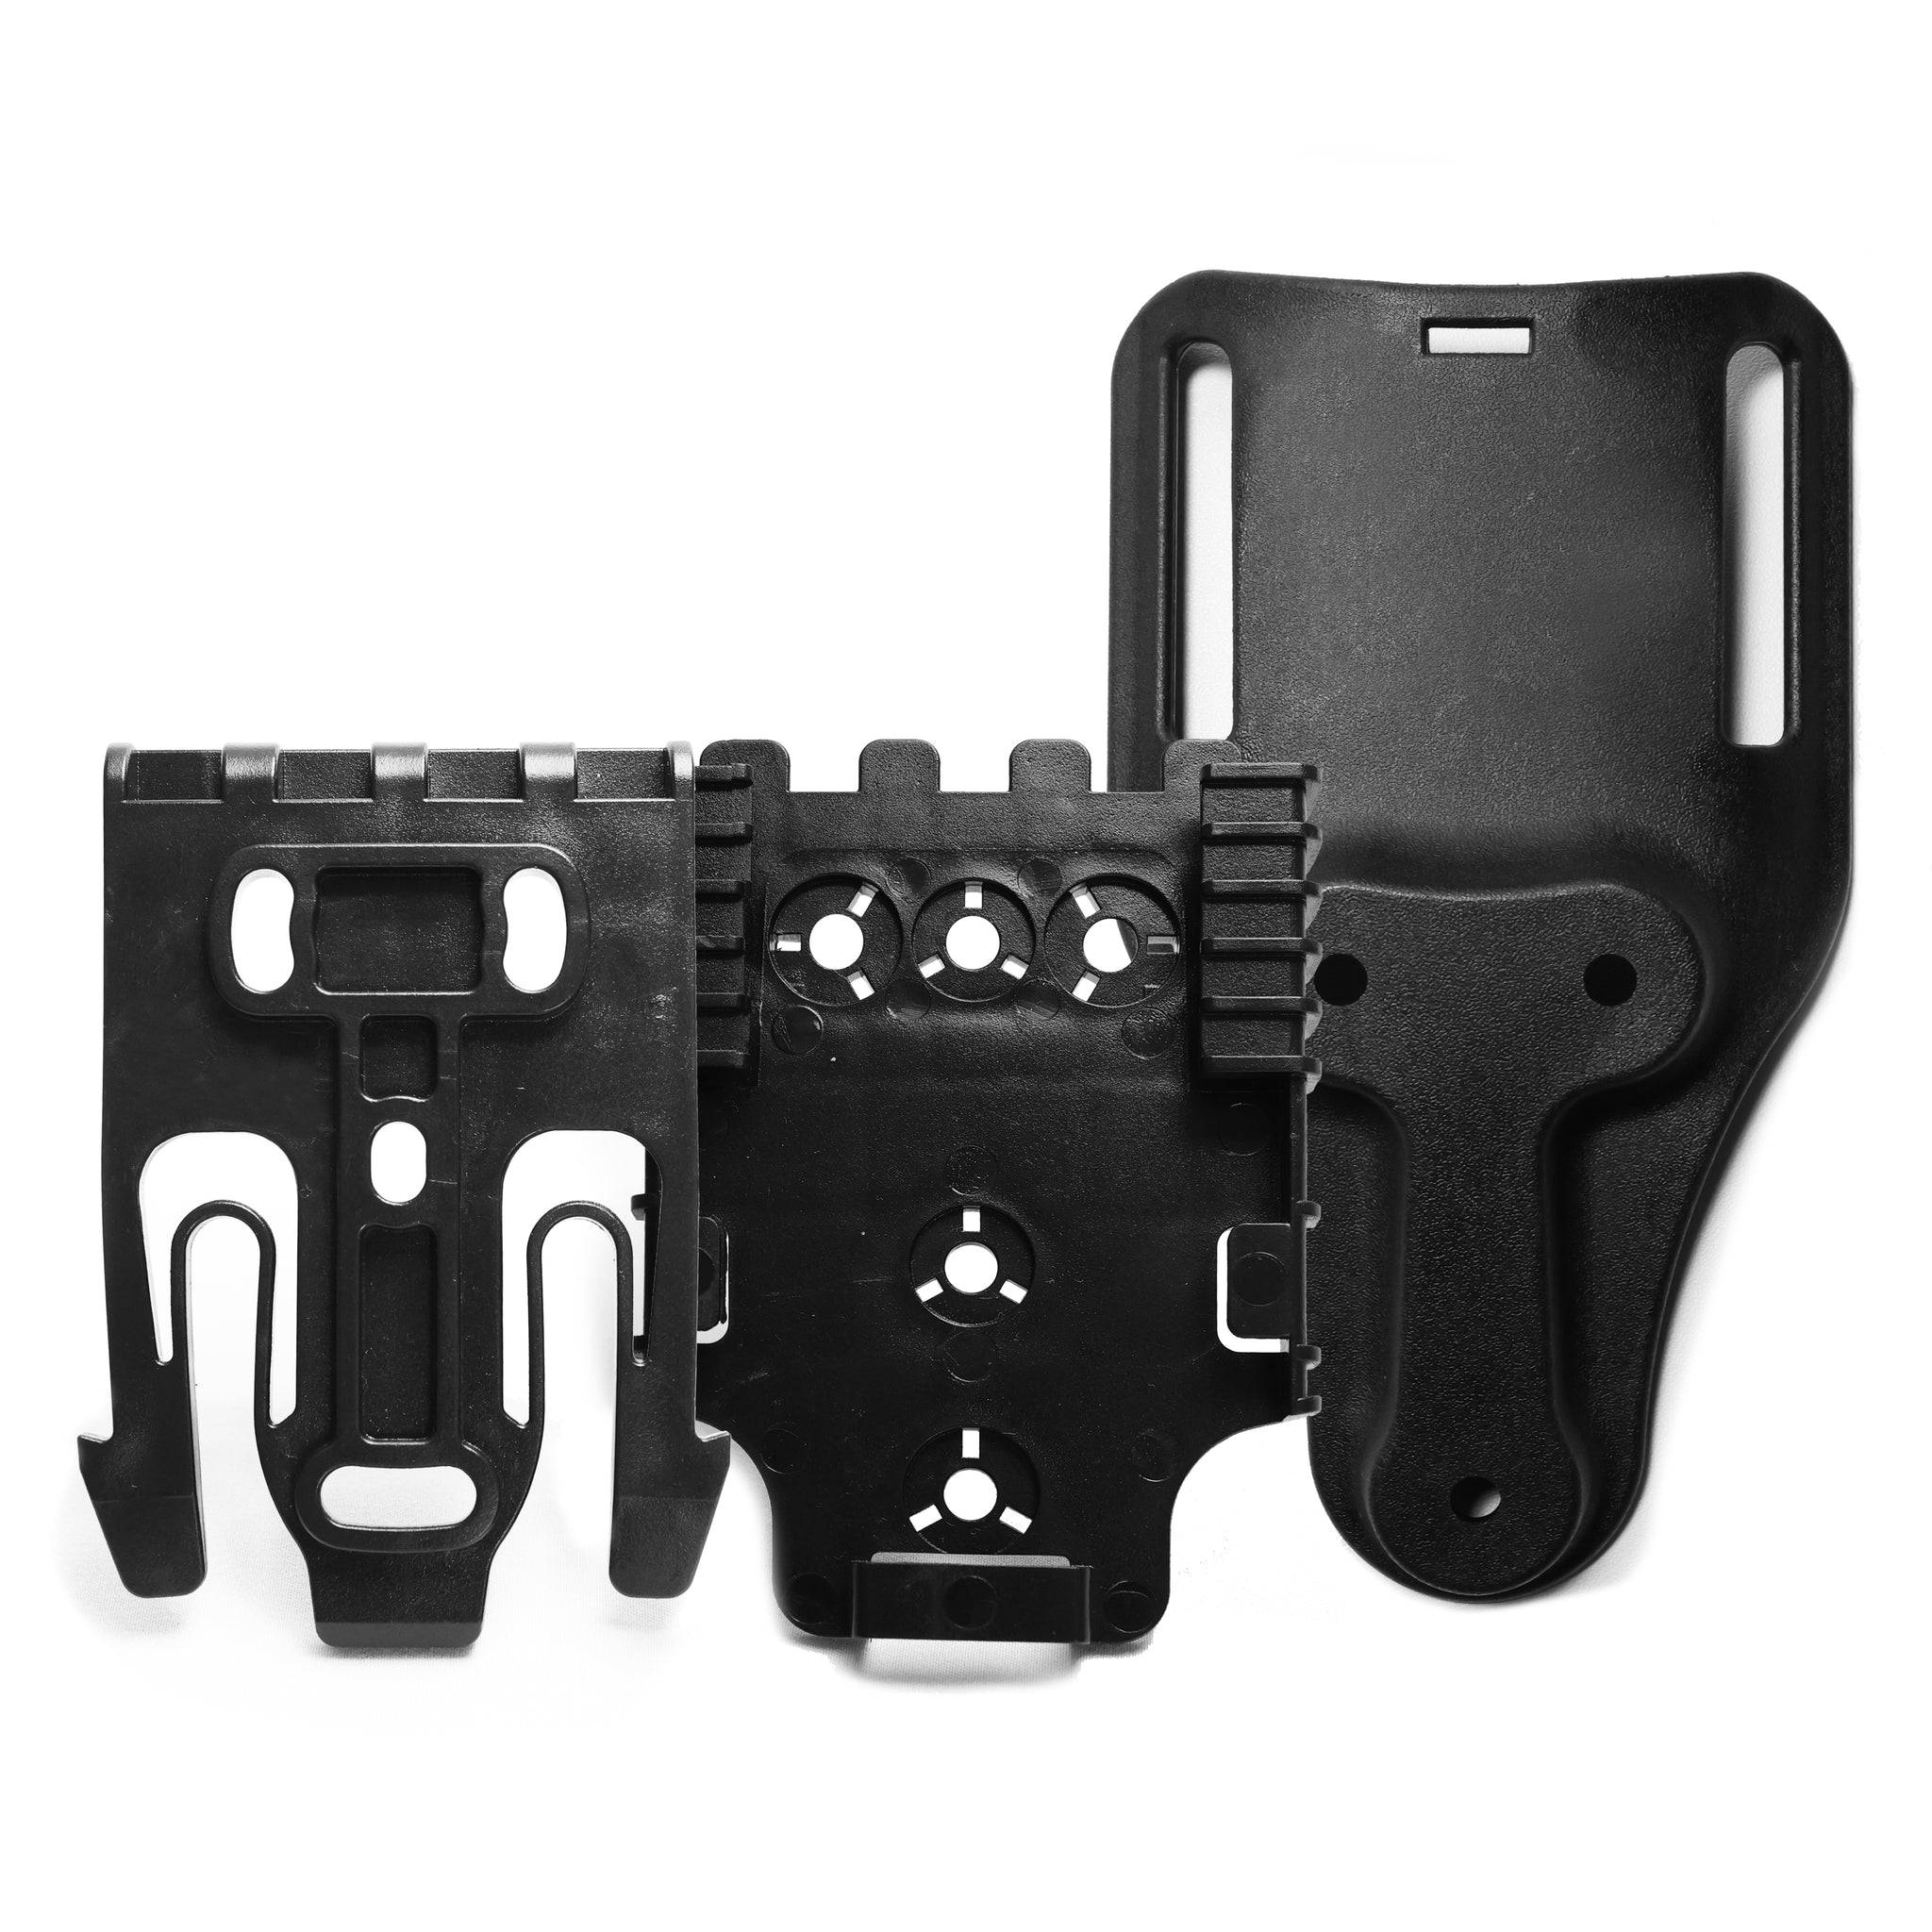 QLS Quick Locking System Bundle Kit with 2 Mid Ride Locking – Holstopia